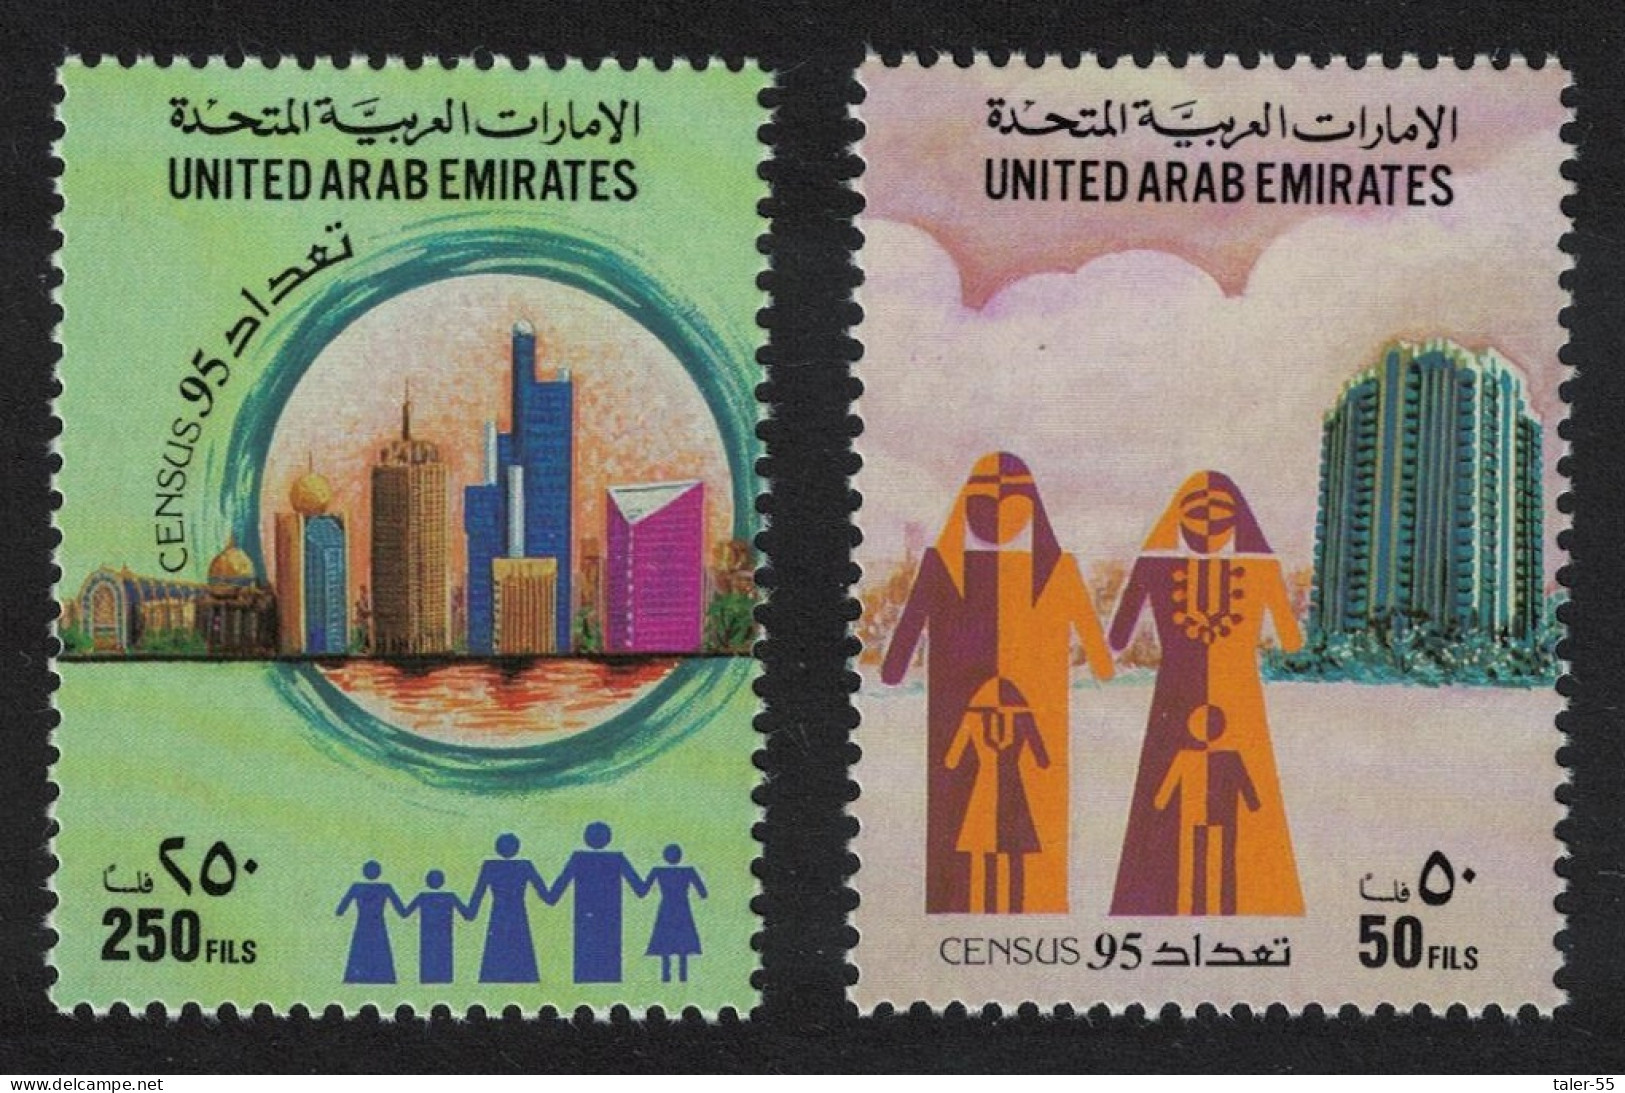 United Arab Emirates Population And Housing Census 2v 1995 MNH SG#496-497 - Ver. Arab. Emirate